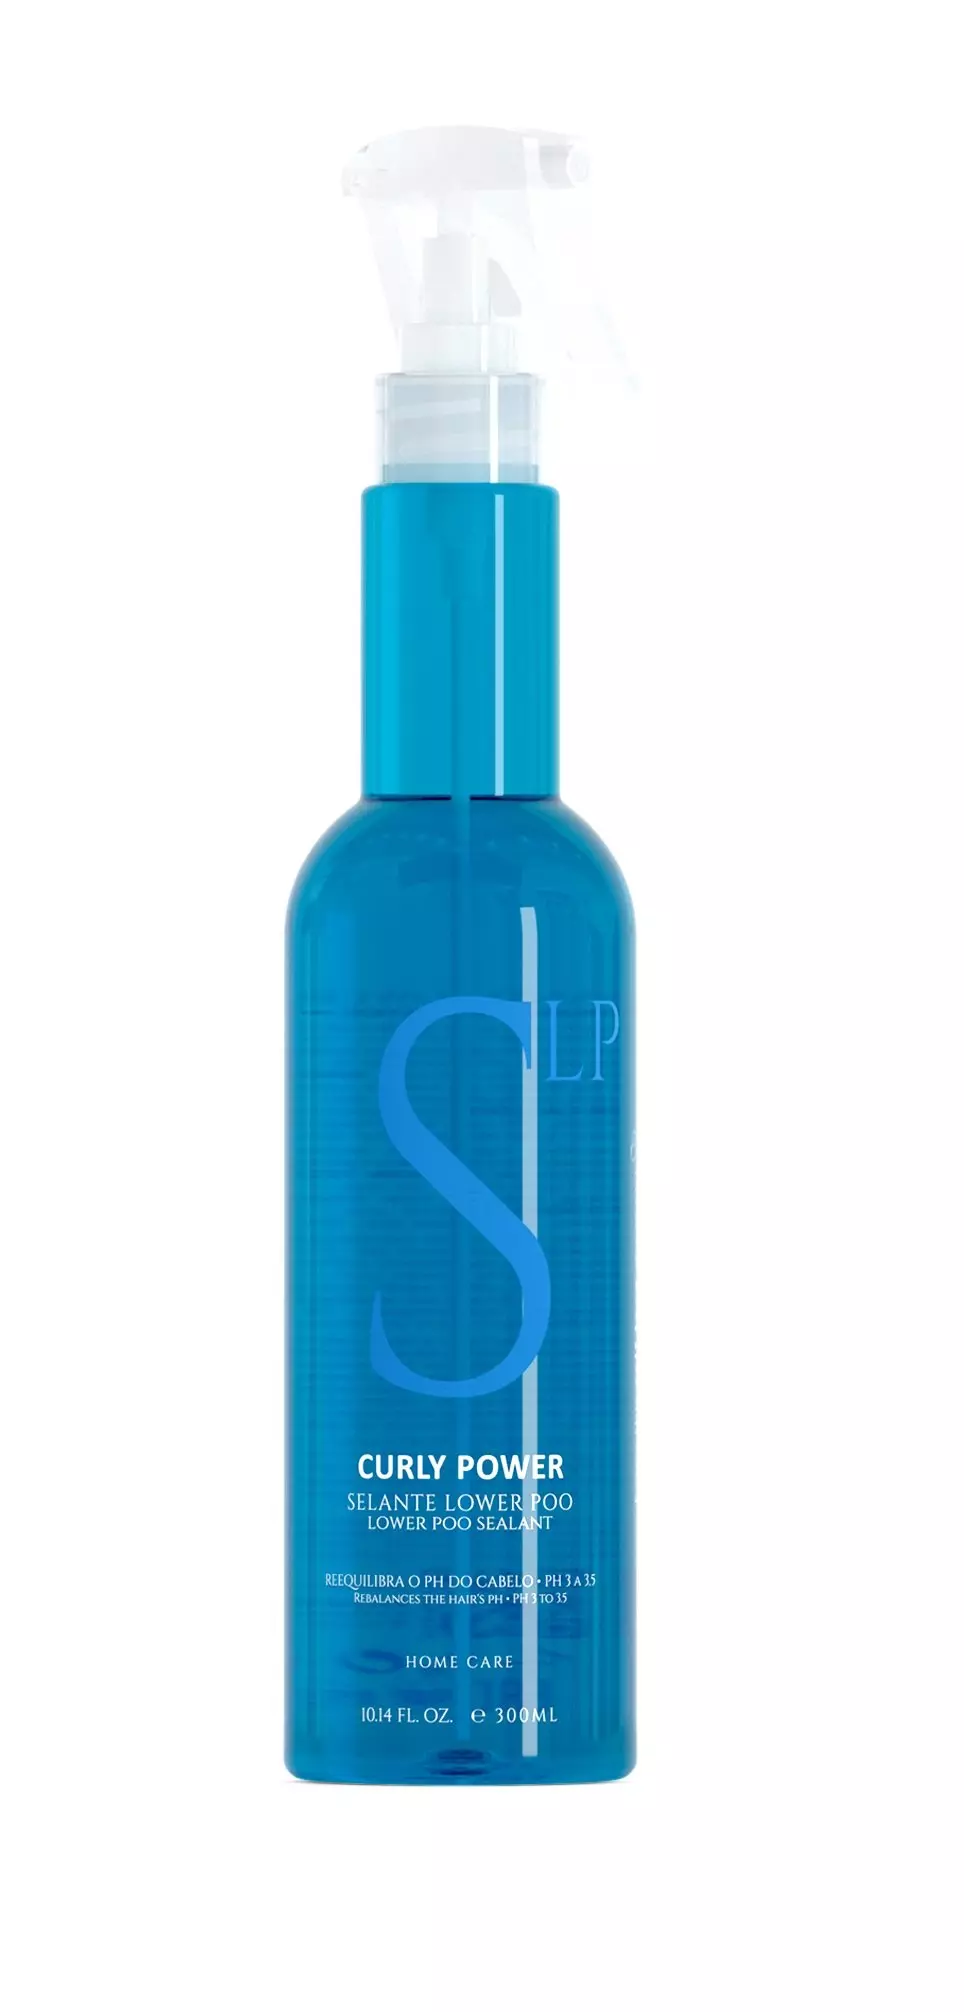 Evan Curly Power Sealant Lower Poo